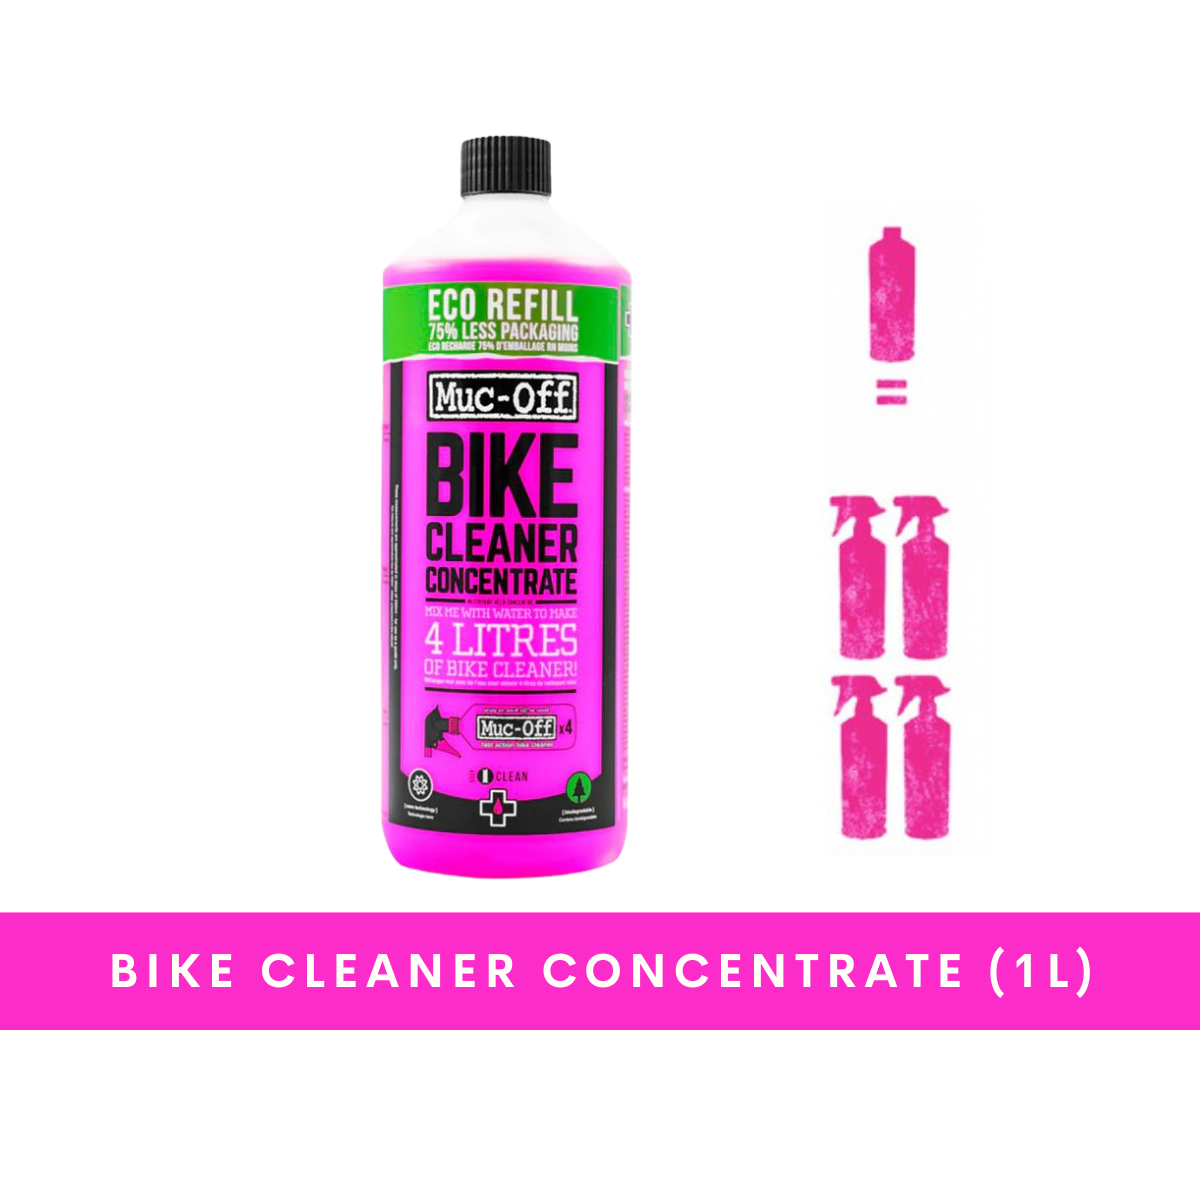 Muc-Off Bike Cleaner Concentrate (1L)